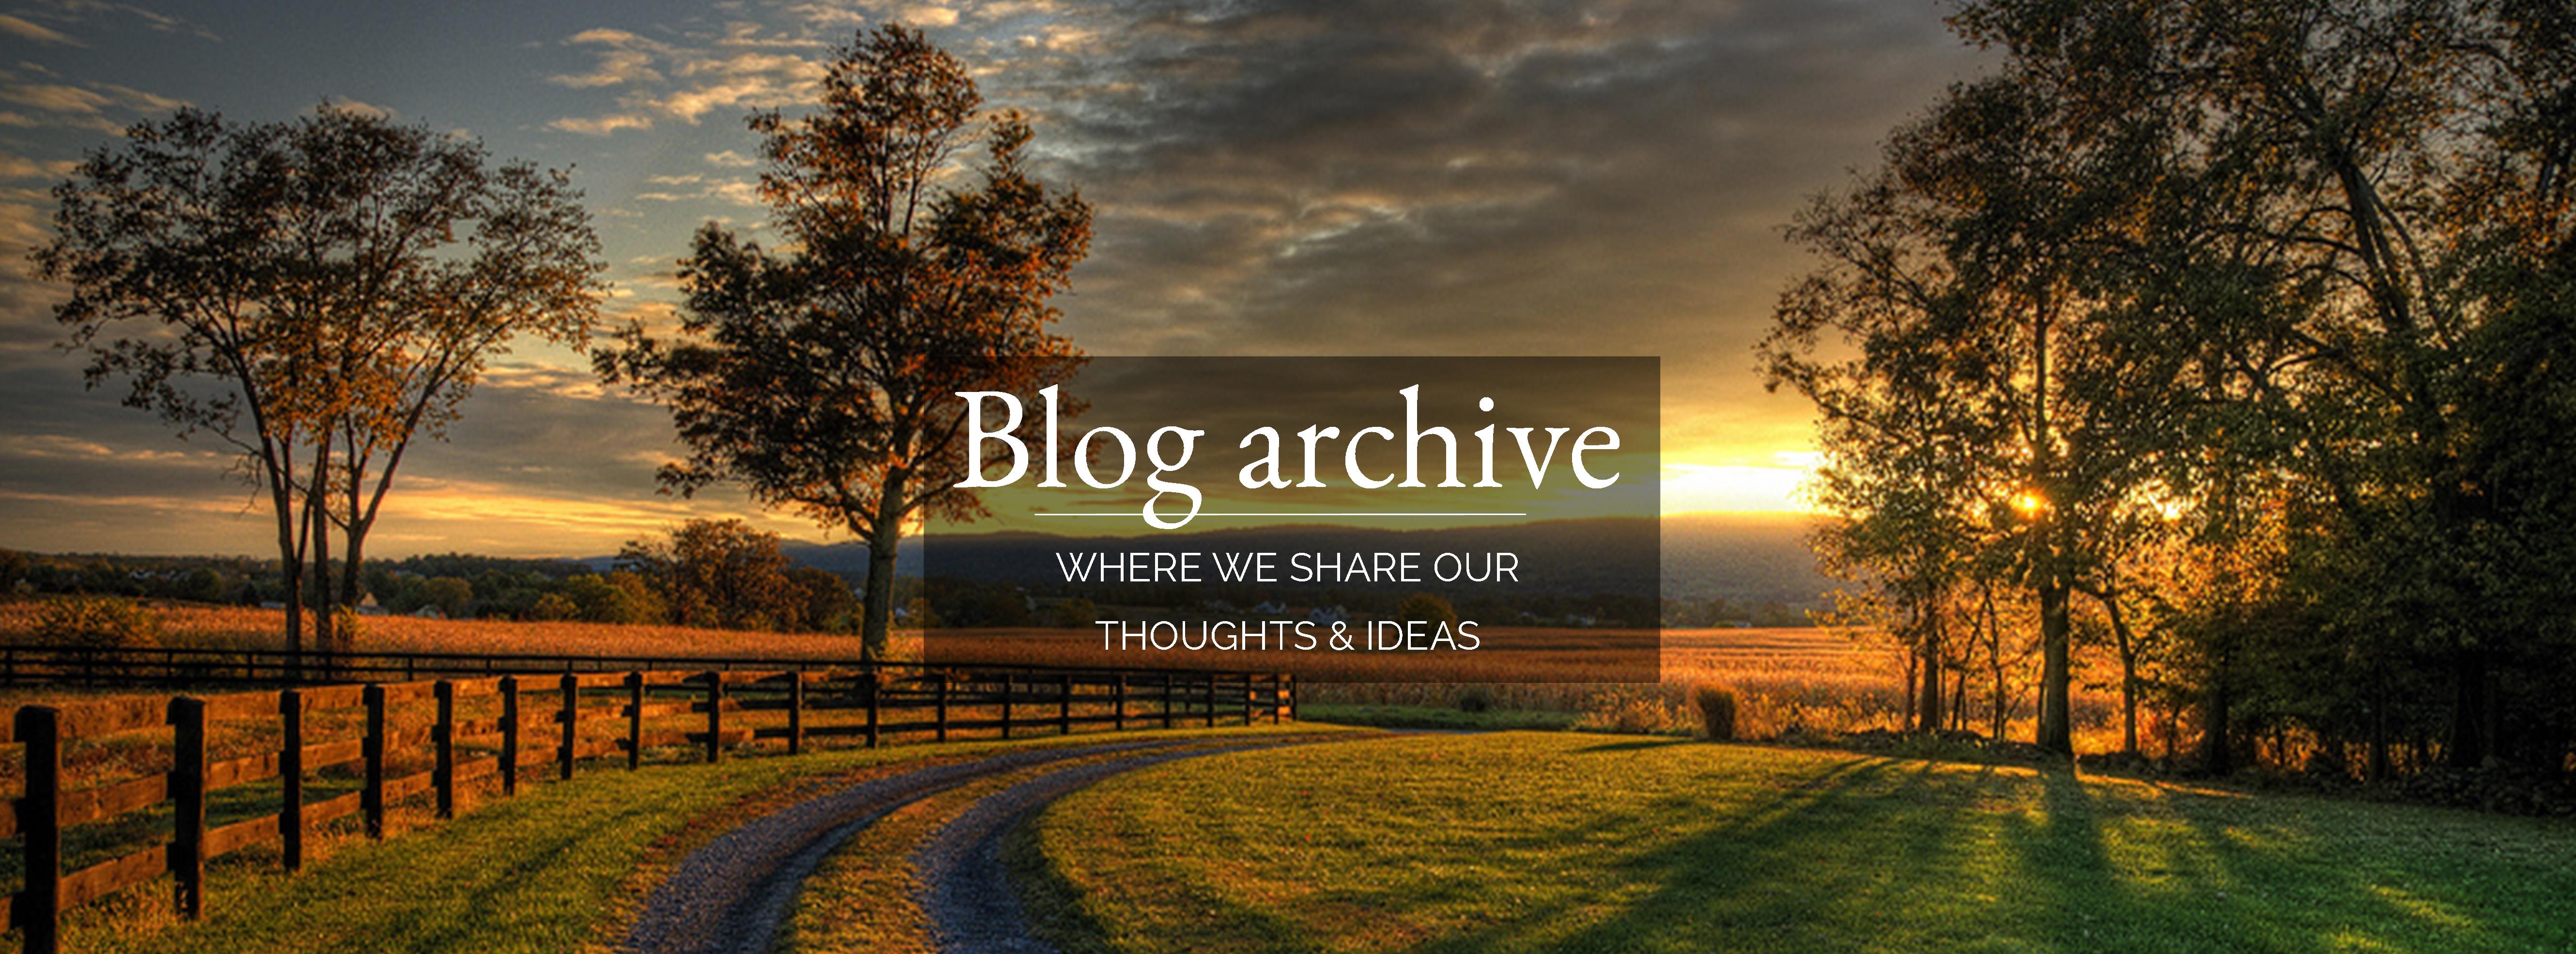 blog_archive_main